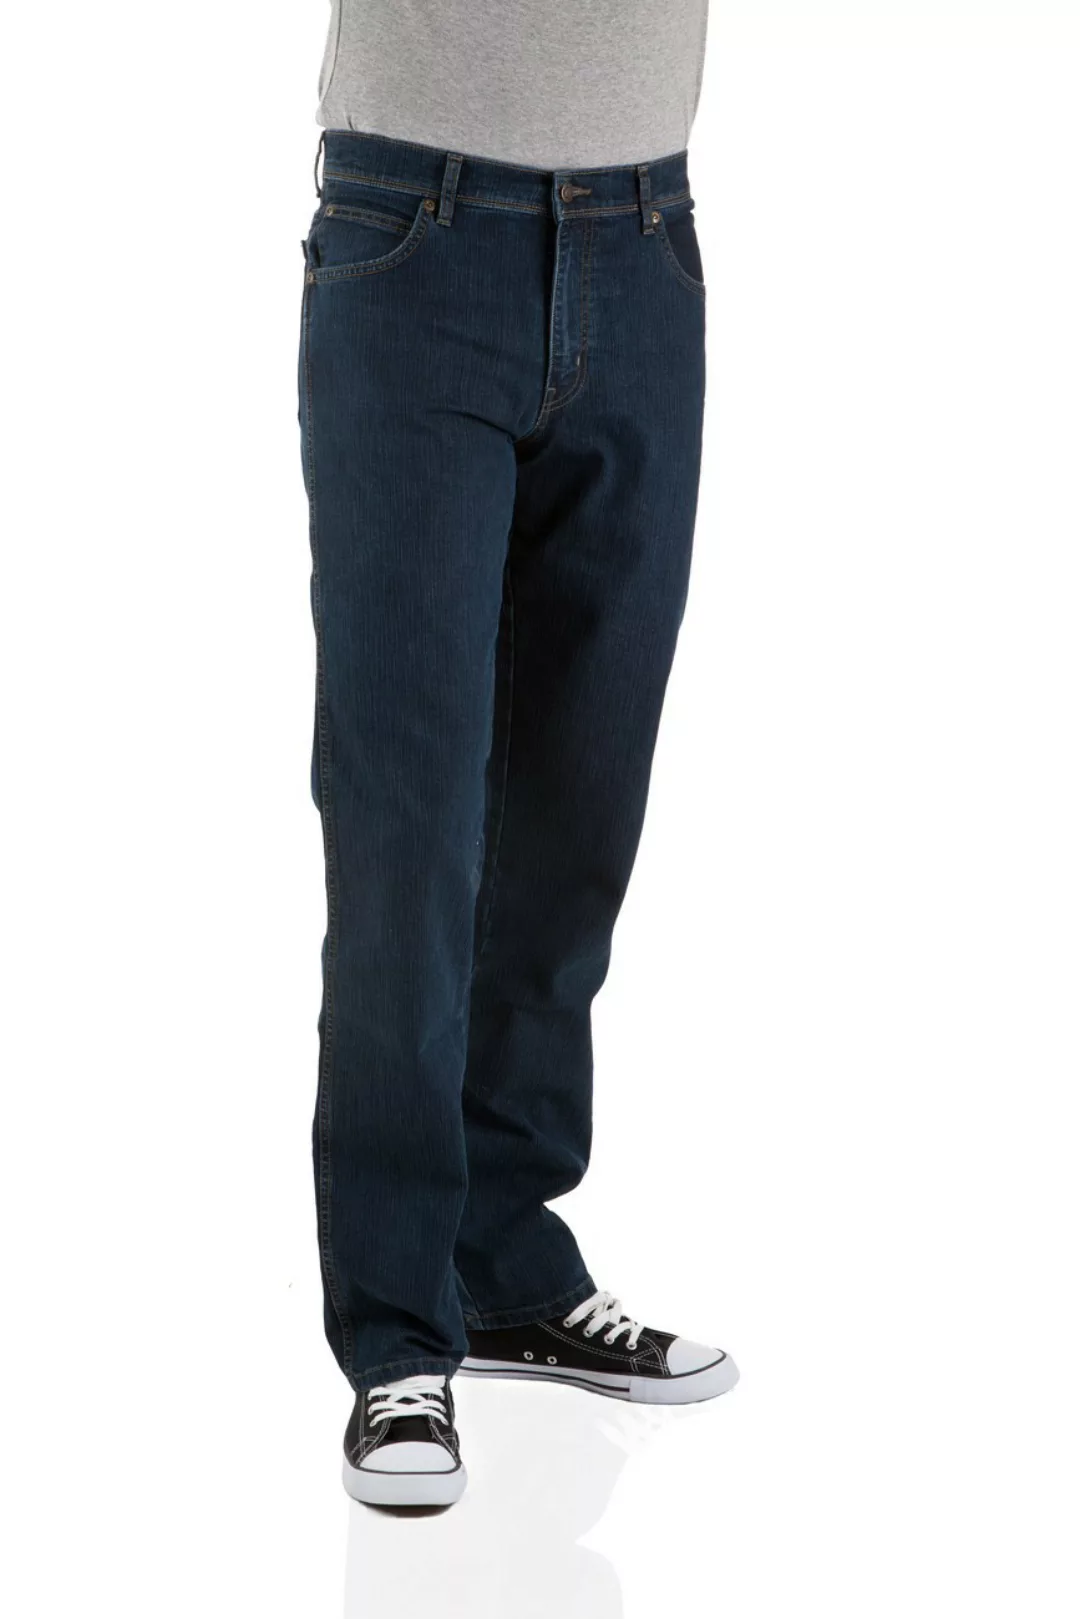 Wrangler Herren Durable Jeans - Regular Fit günstig online kaufen